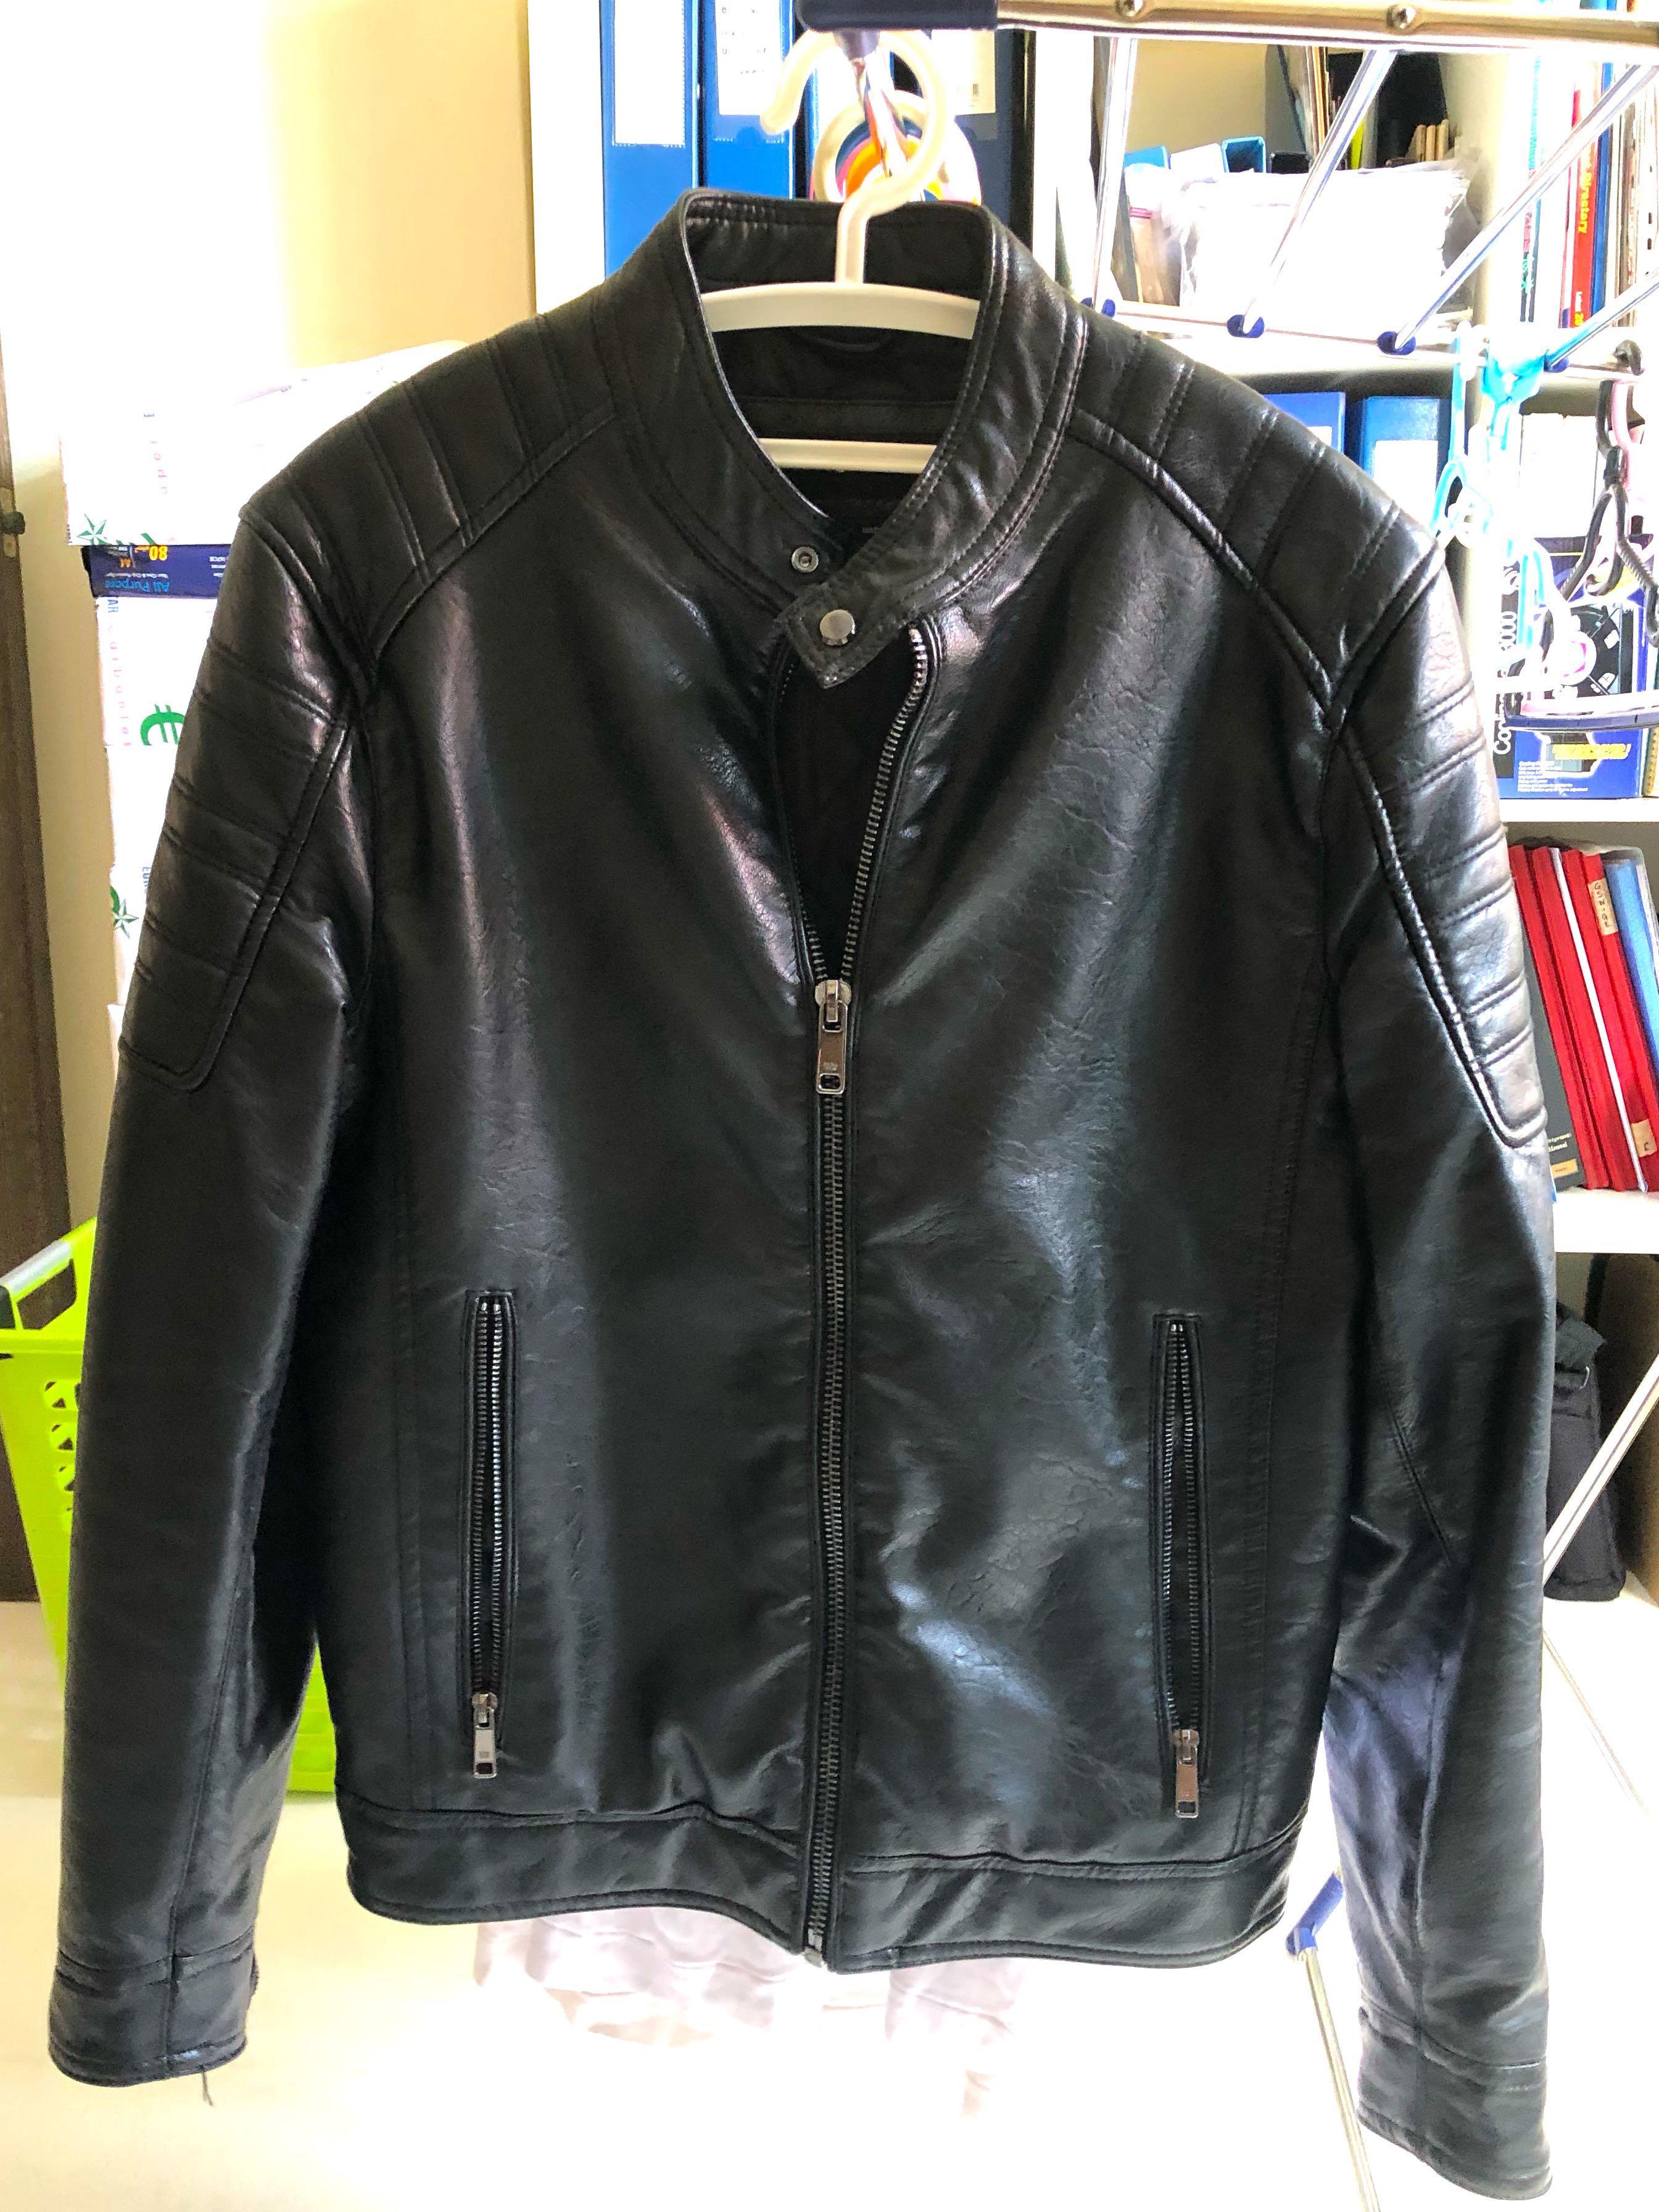 zara man leather jacket price